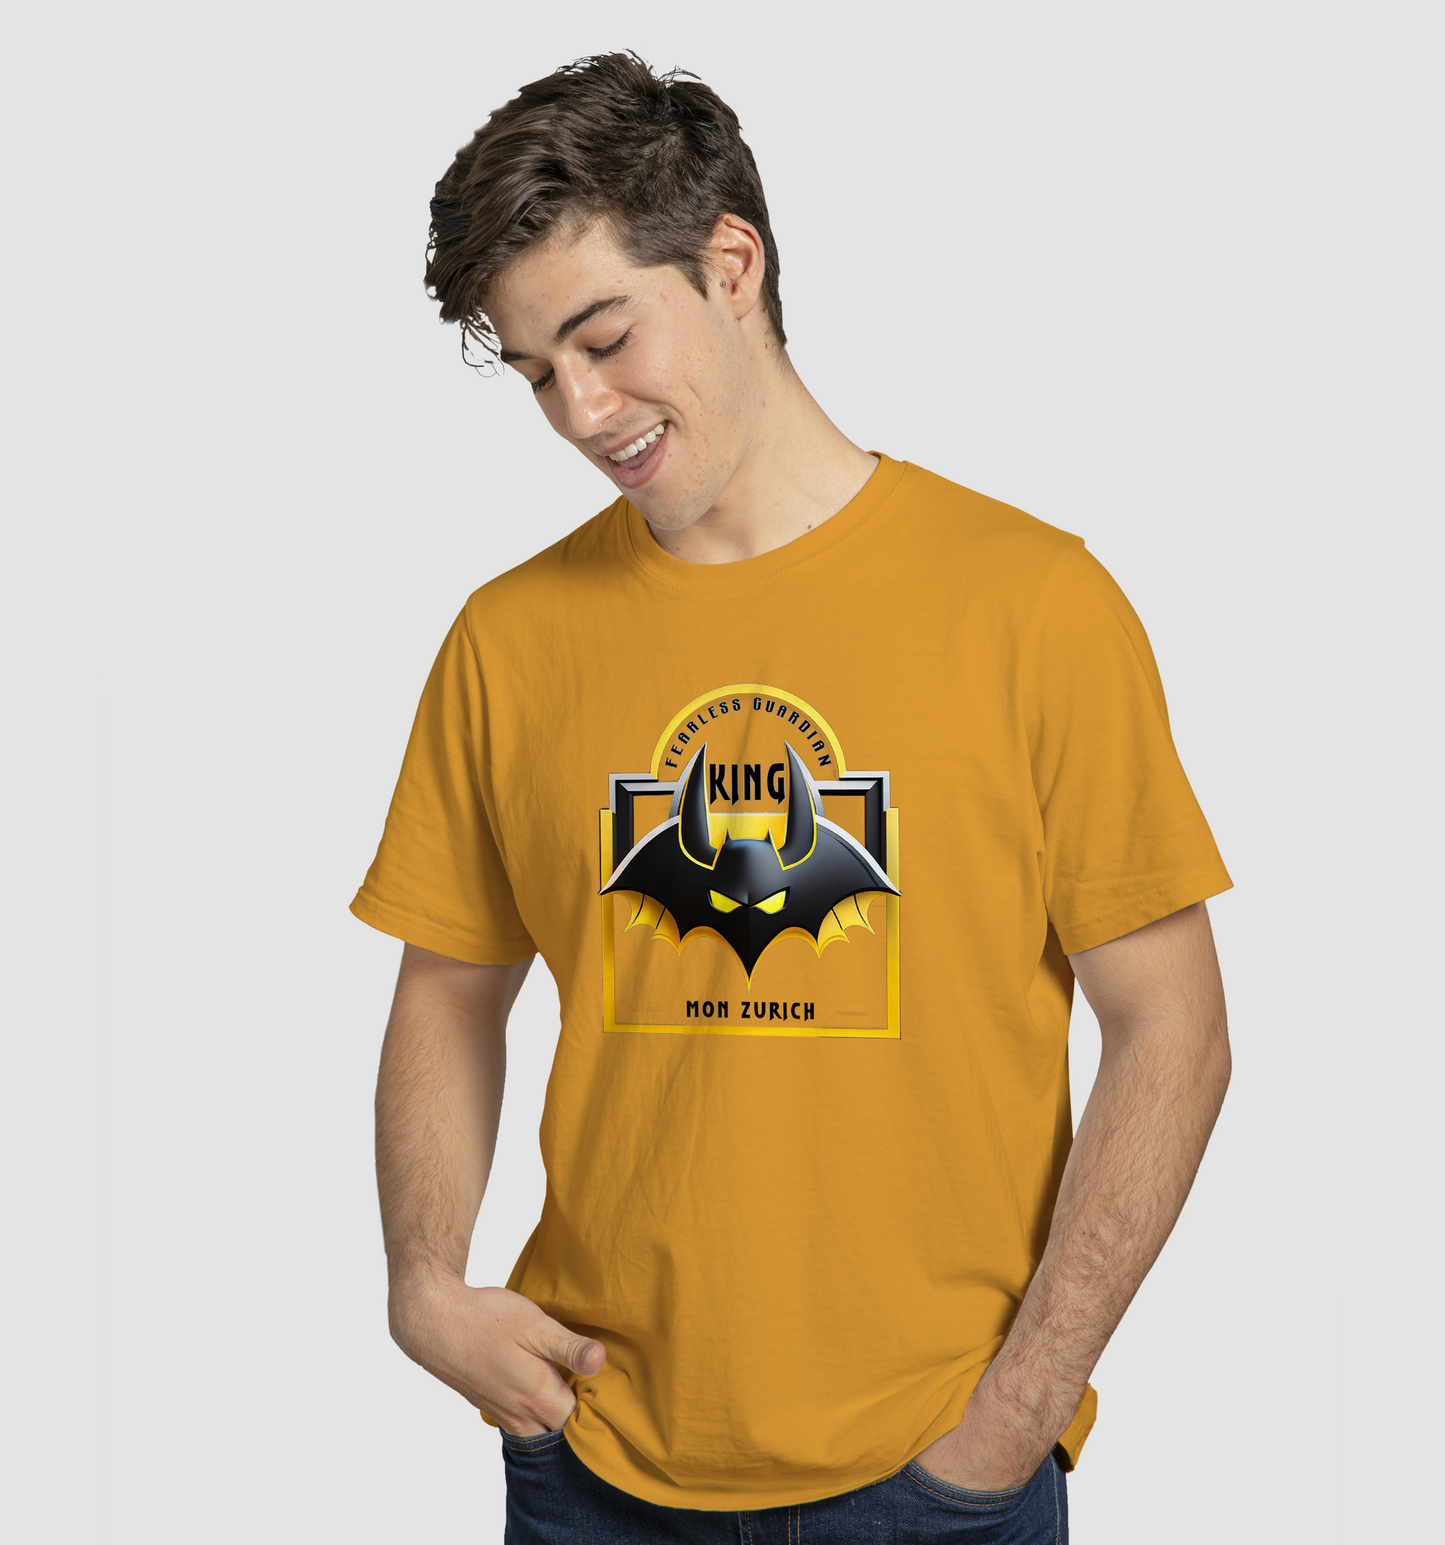 Bat King T-Shirt In Light - Mon Zurich Originals